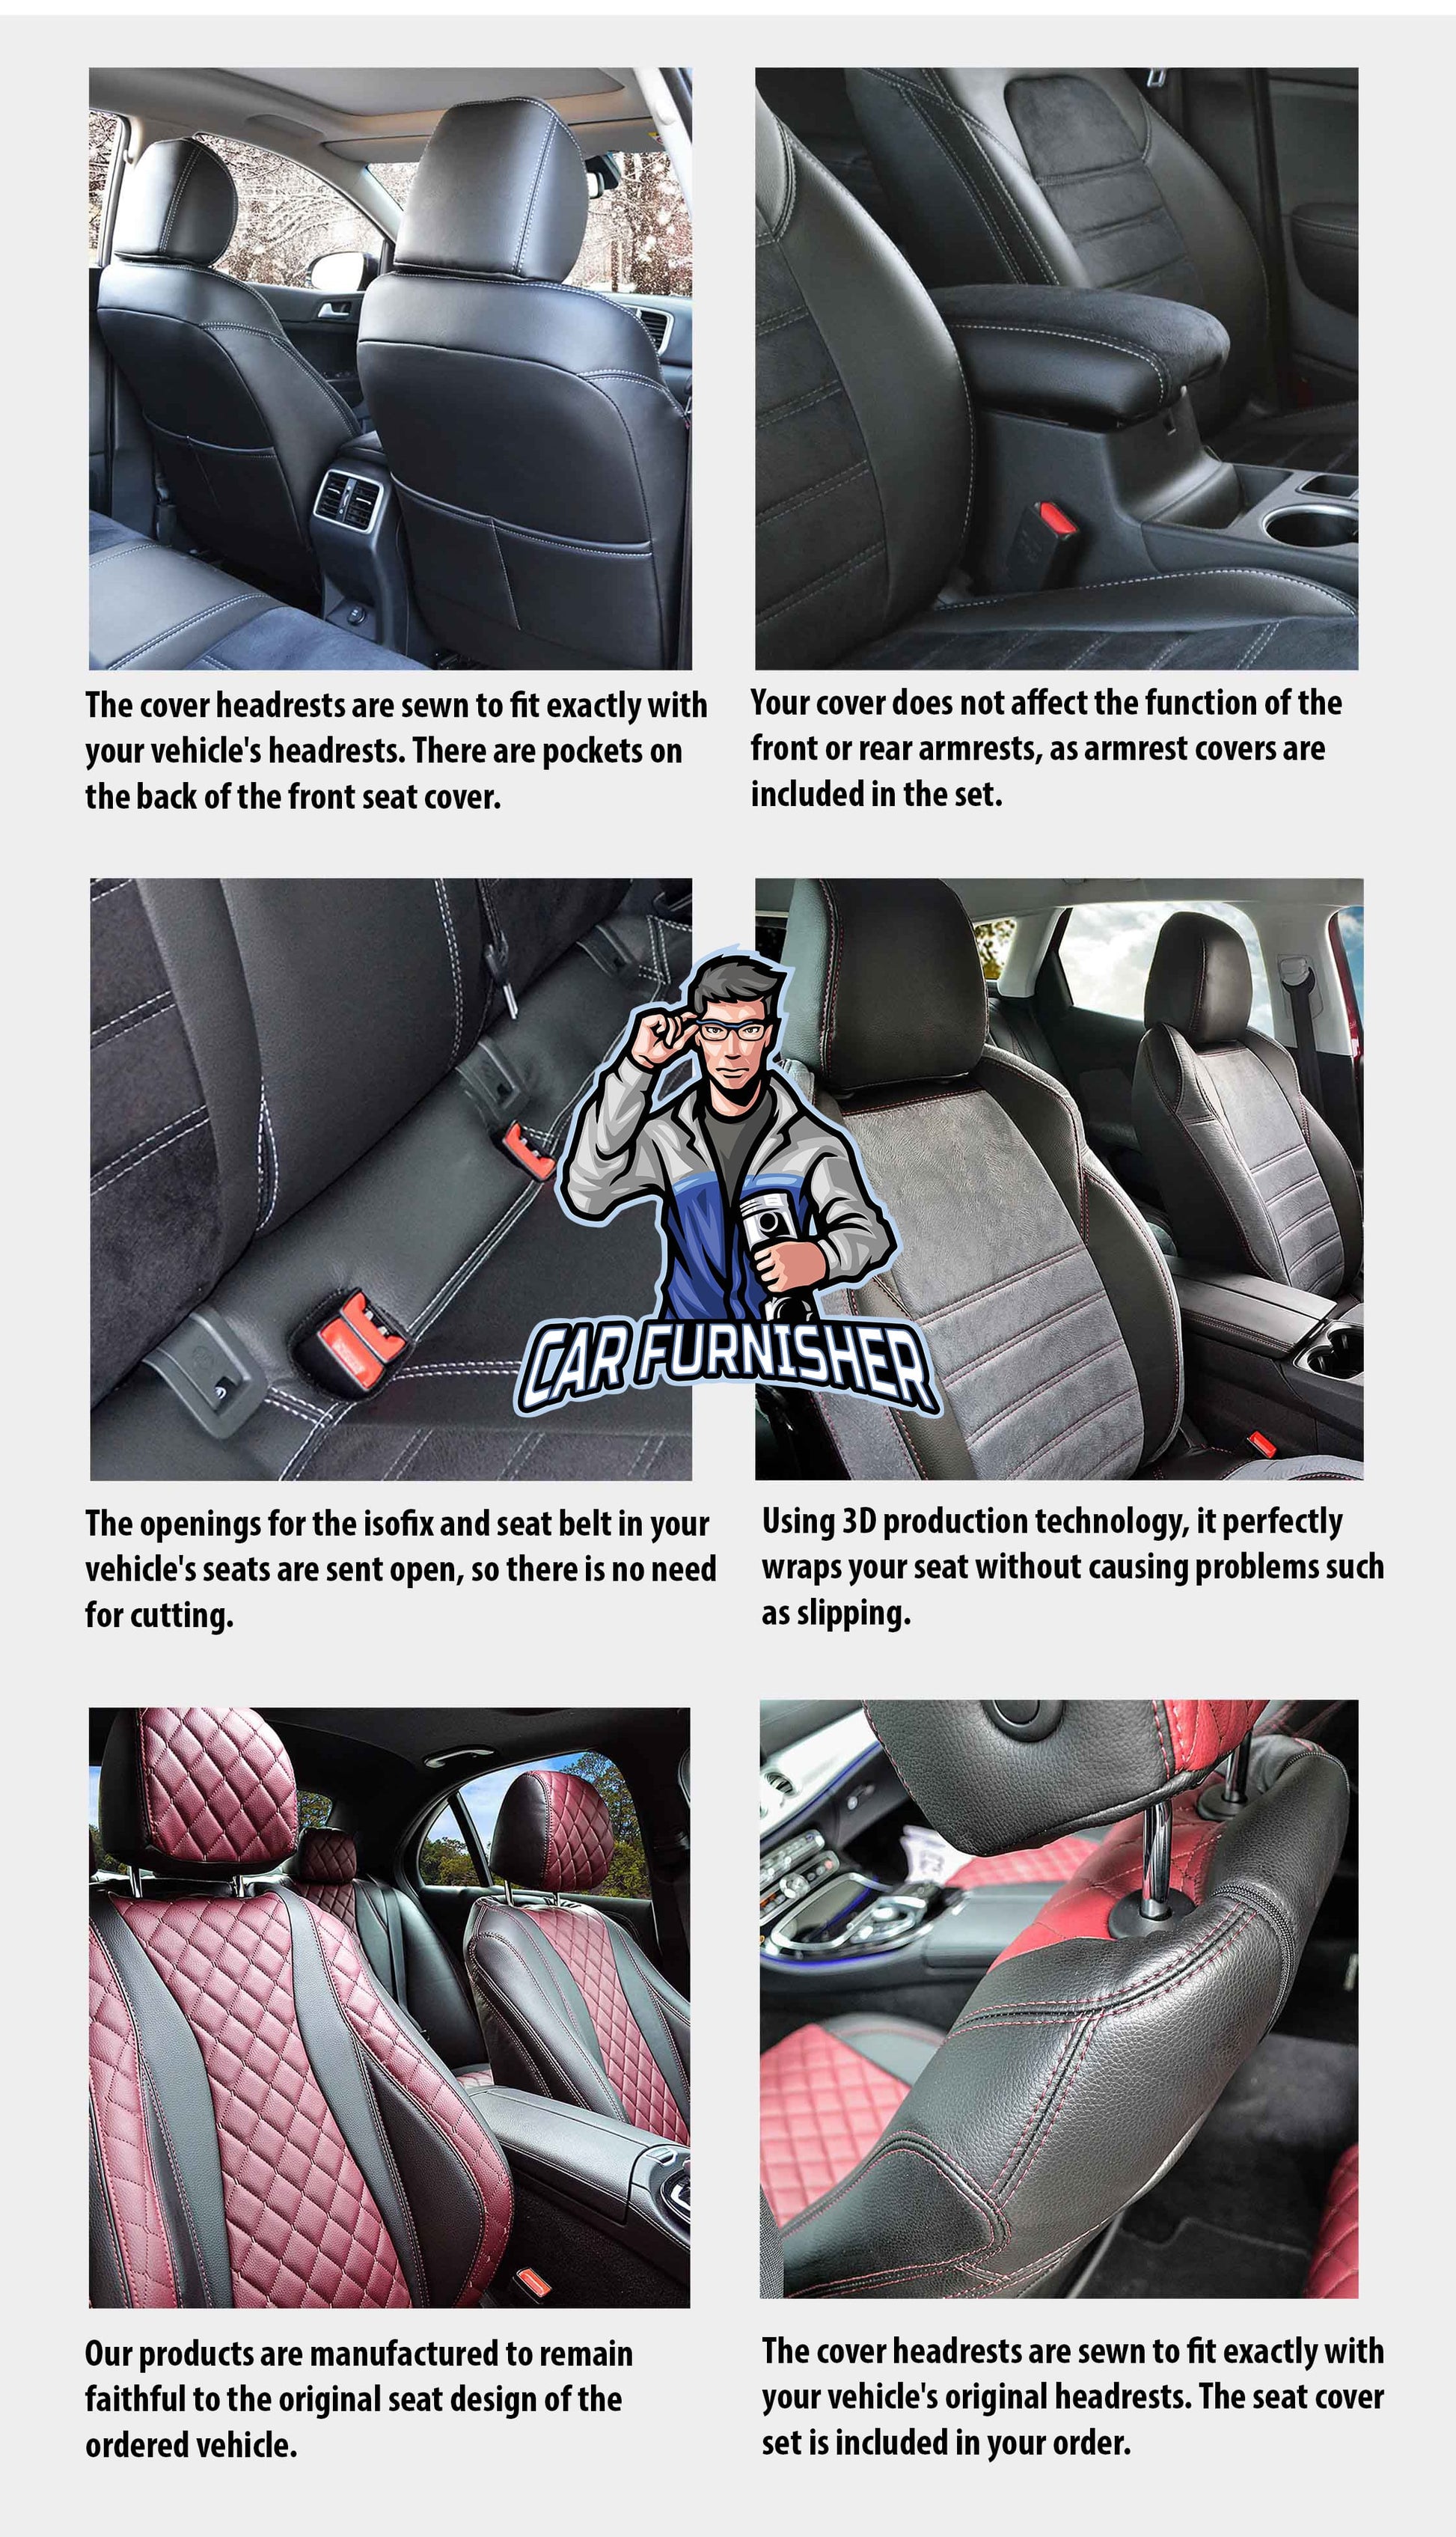 Kia Venga Seat Cover Milano Suede Design Smoked Leather & Suede Fabric